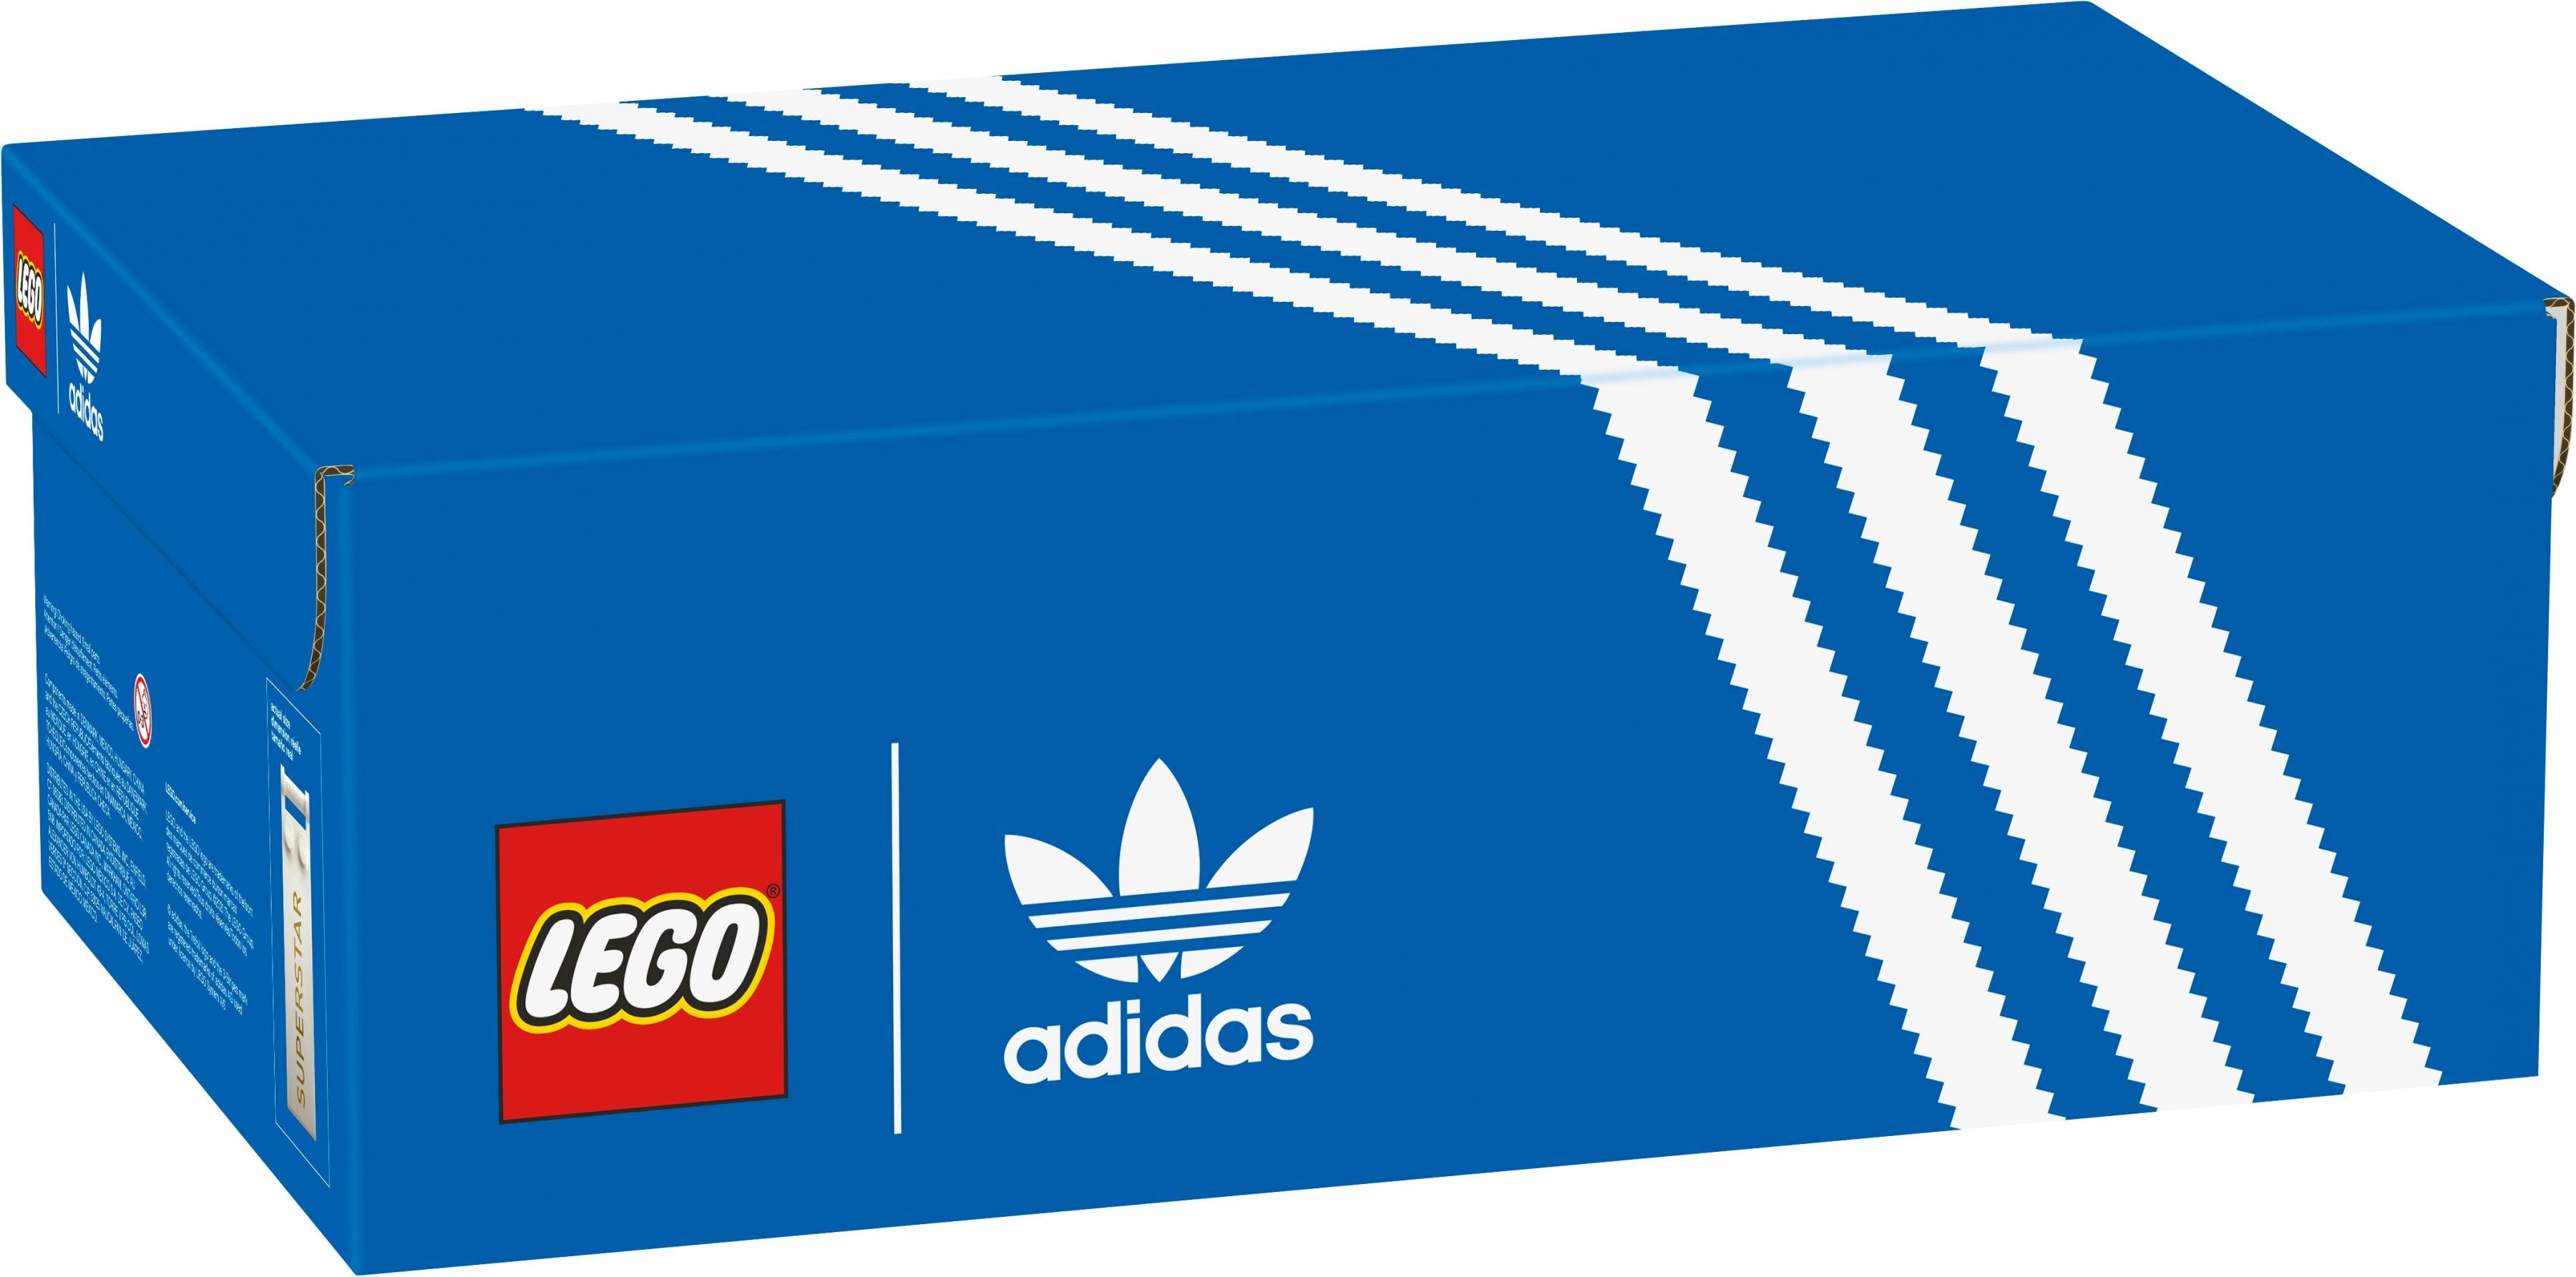 LEGO Advanced Models 10282 adidas Originals Superstar LEGO_10282_box5_v39.jpg